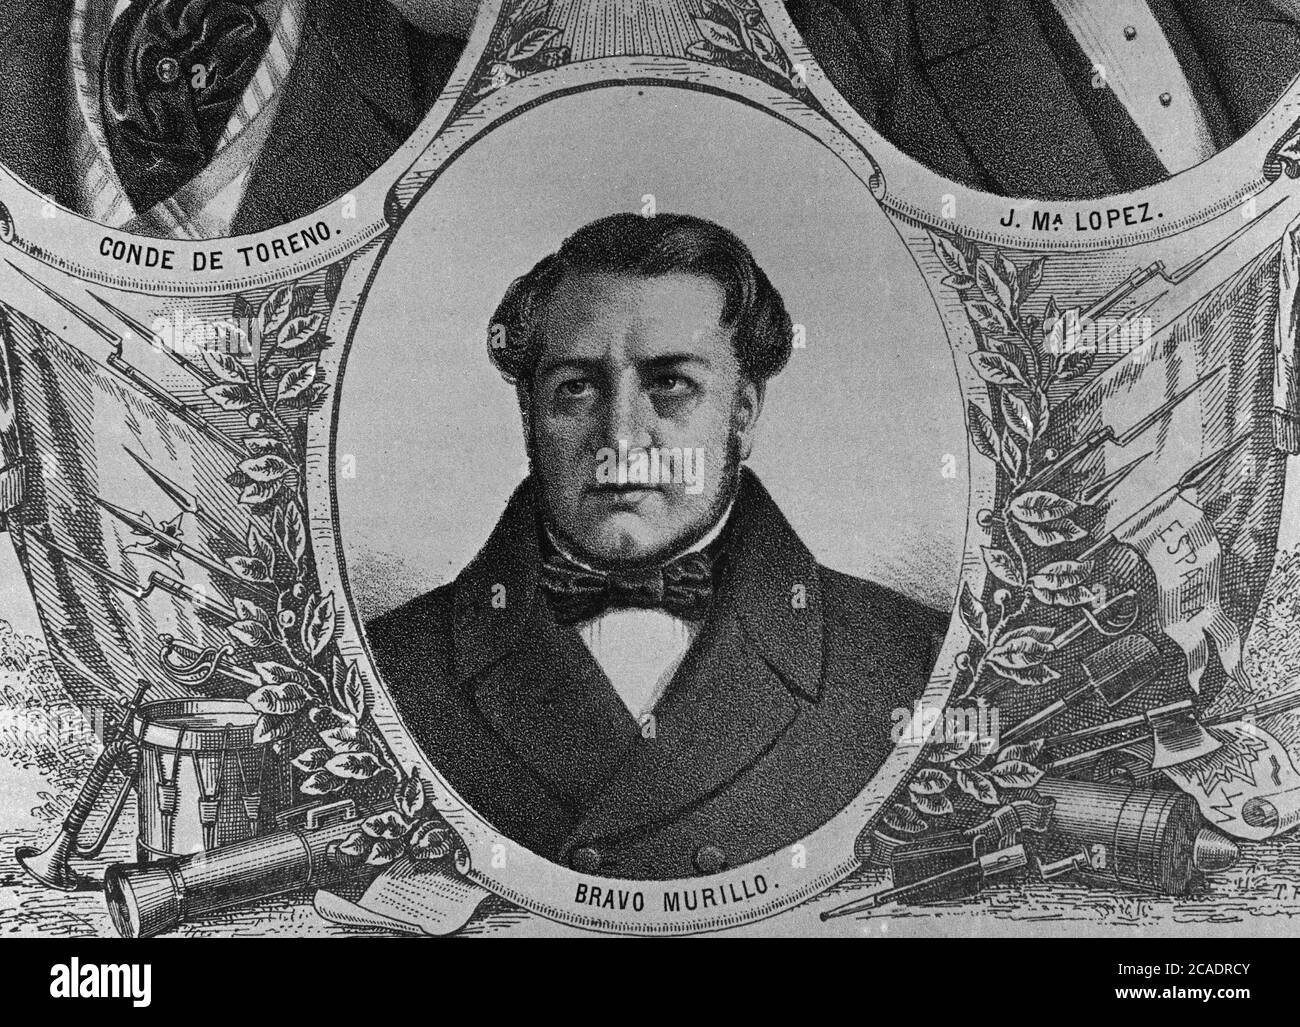 DON JUAN BRAVO MURILLO (1803/1873) - MINISTRO DE HACIENDA Y PRESIDENTE DEL CONSEJO DE MINISTROS. Stock Photo